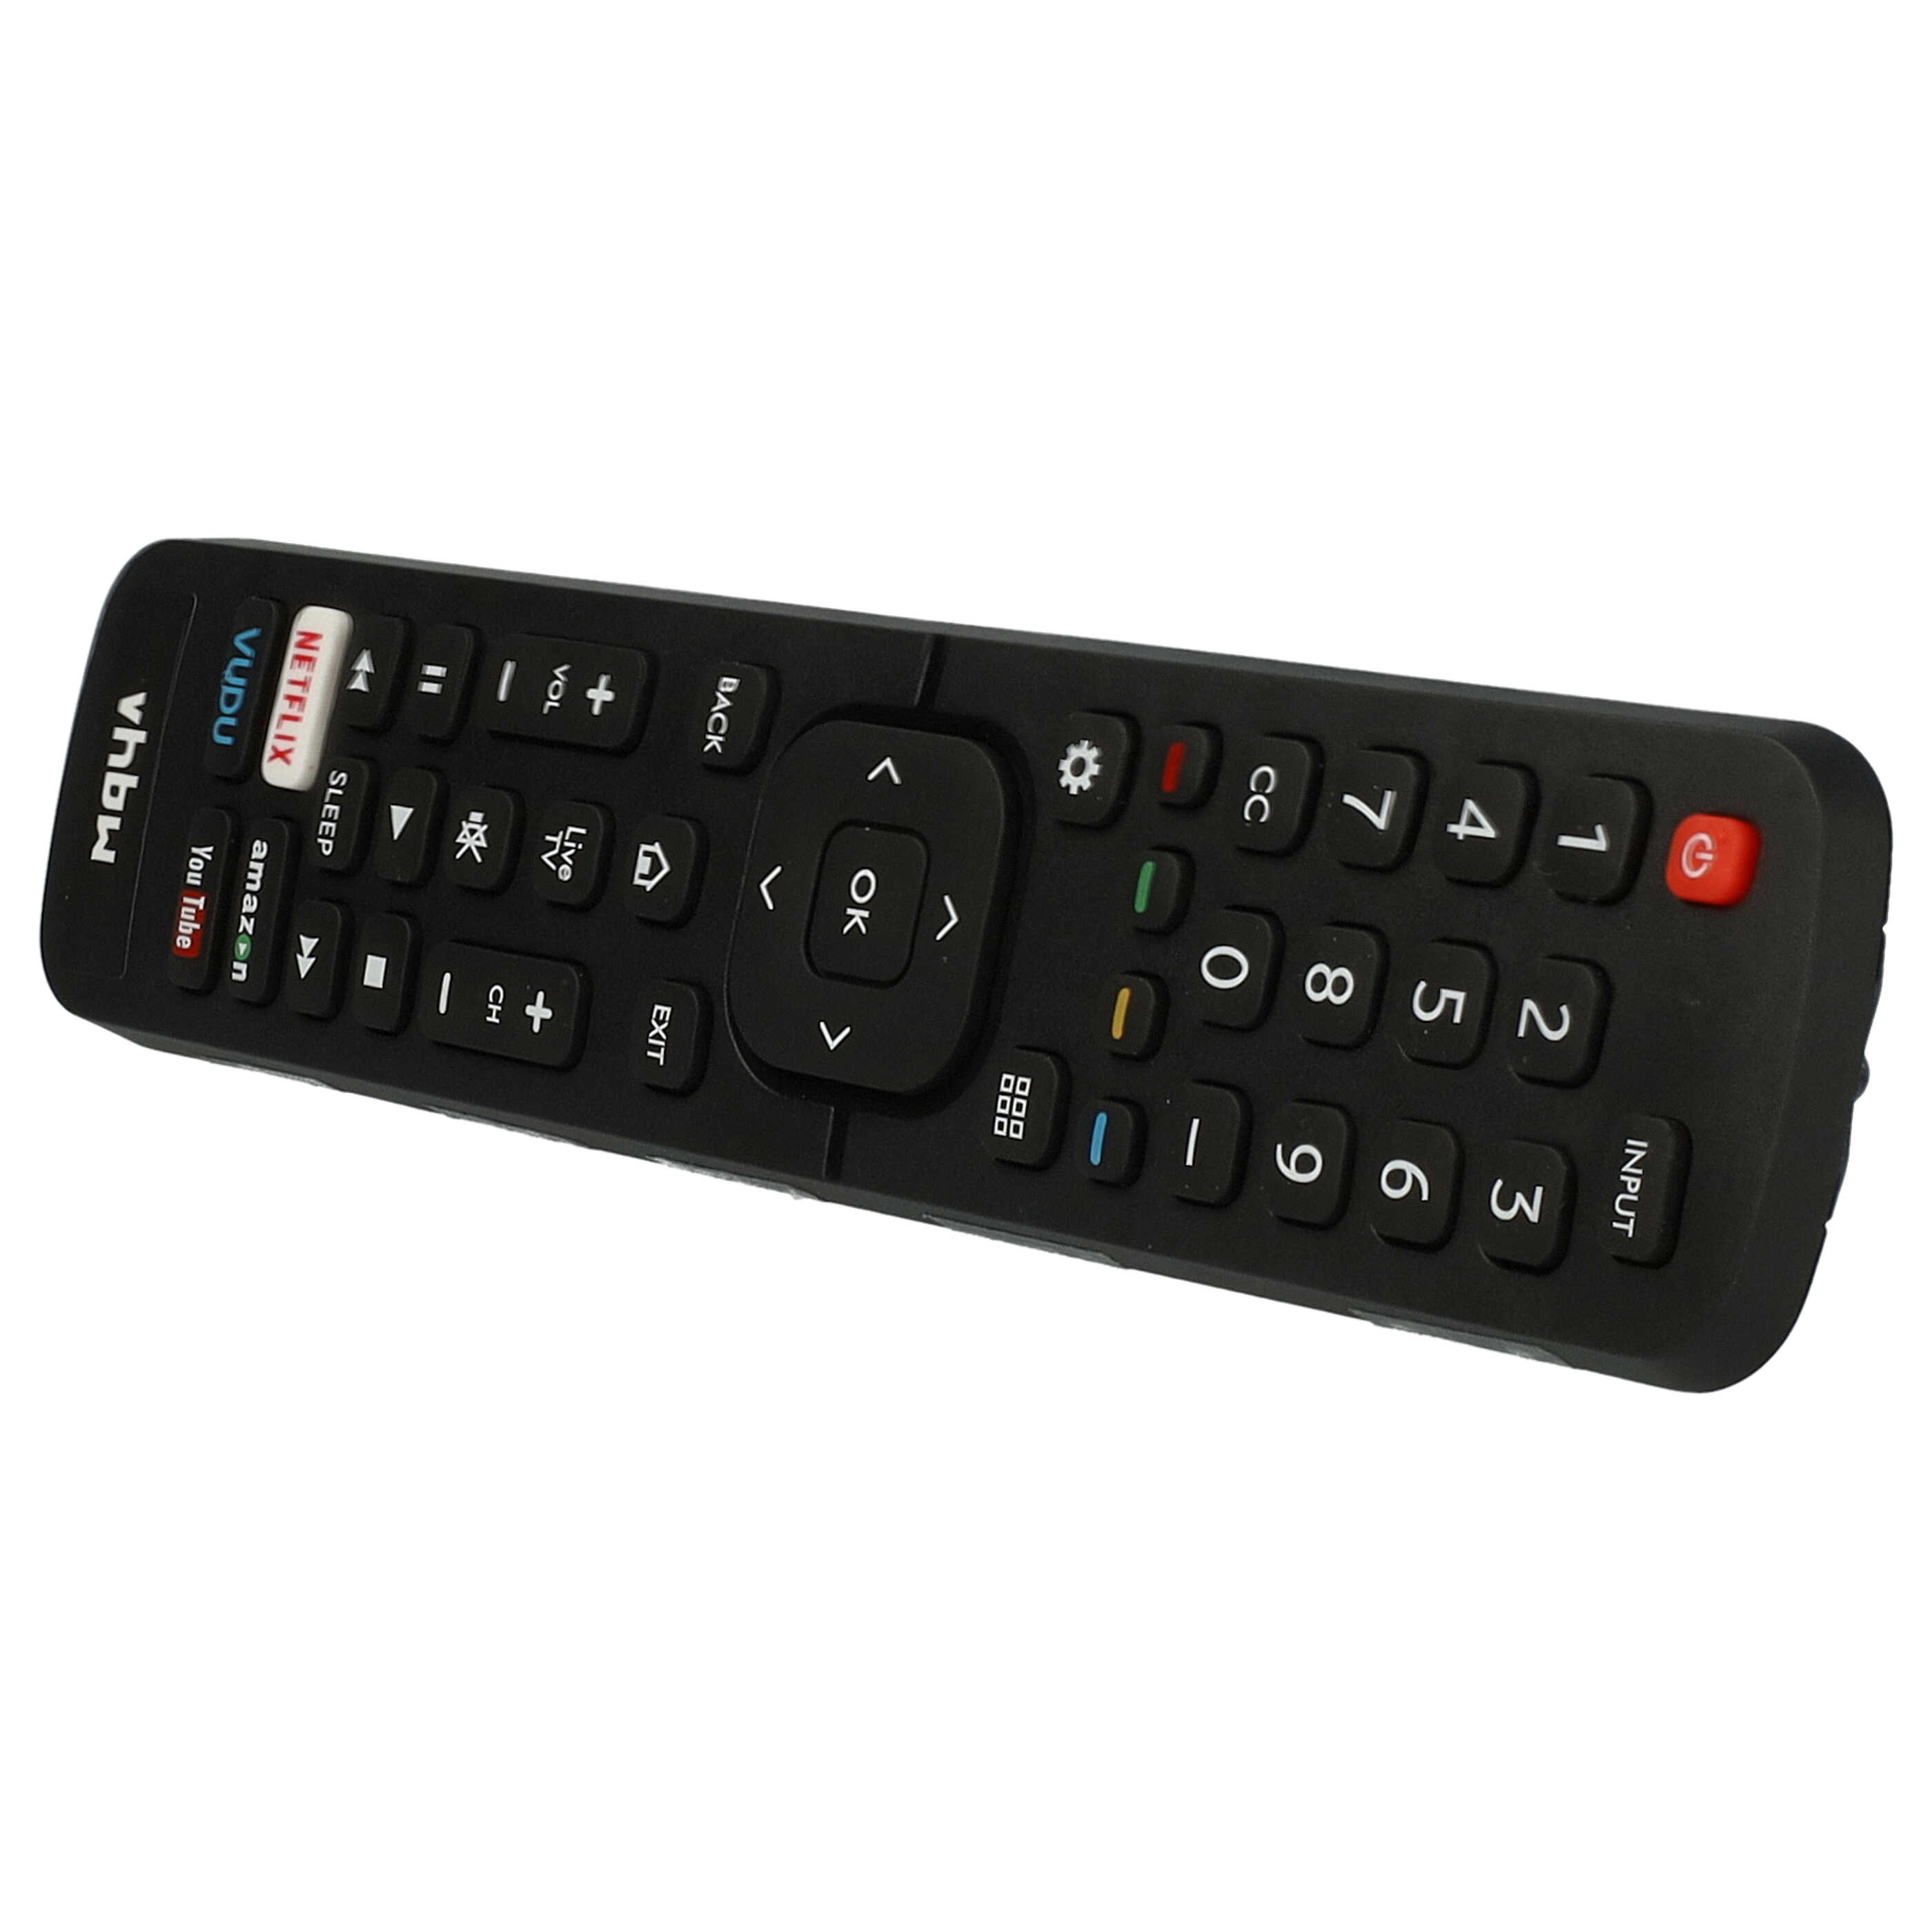 Remote Control replaces Hisense EN2A27 for Hisense TV